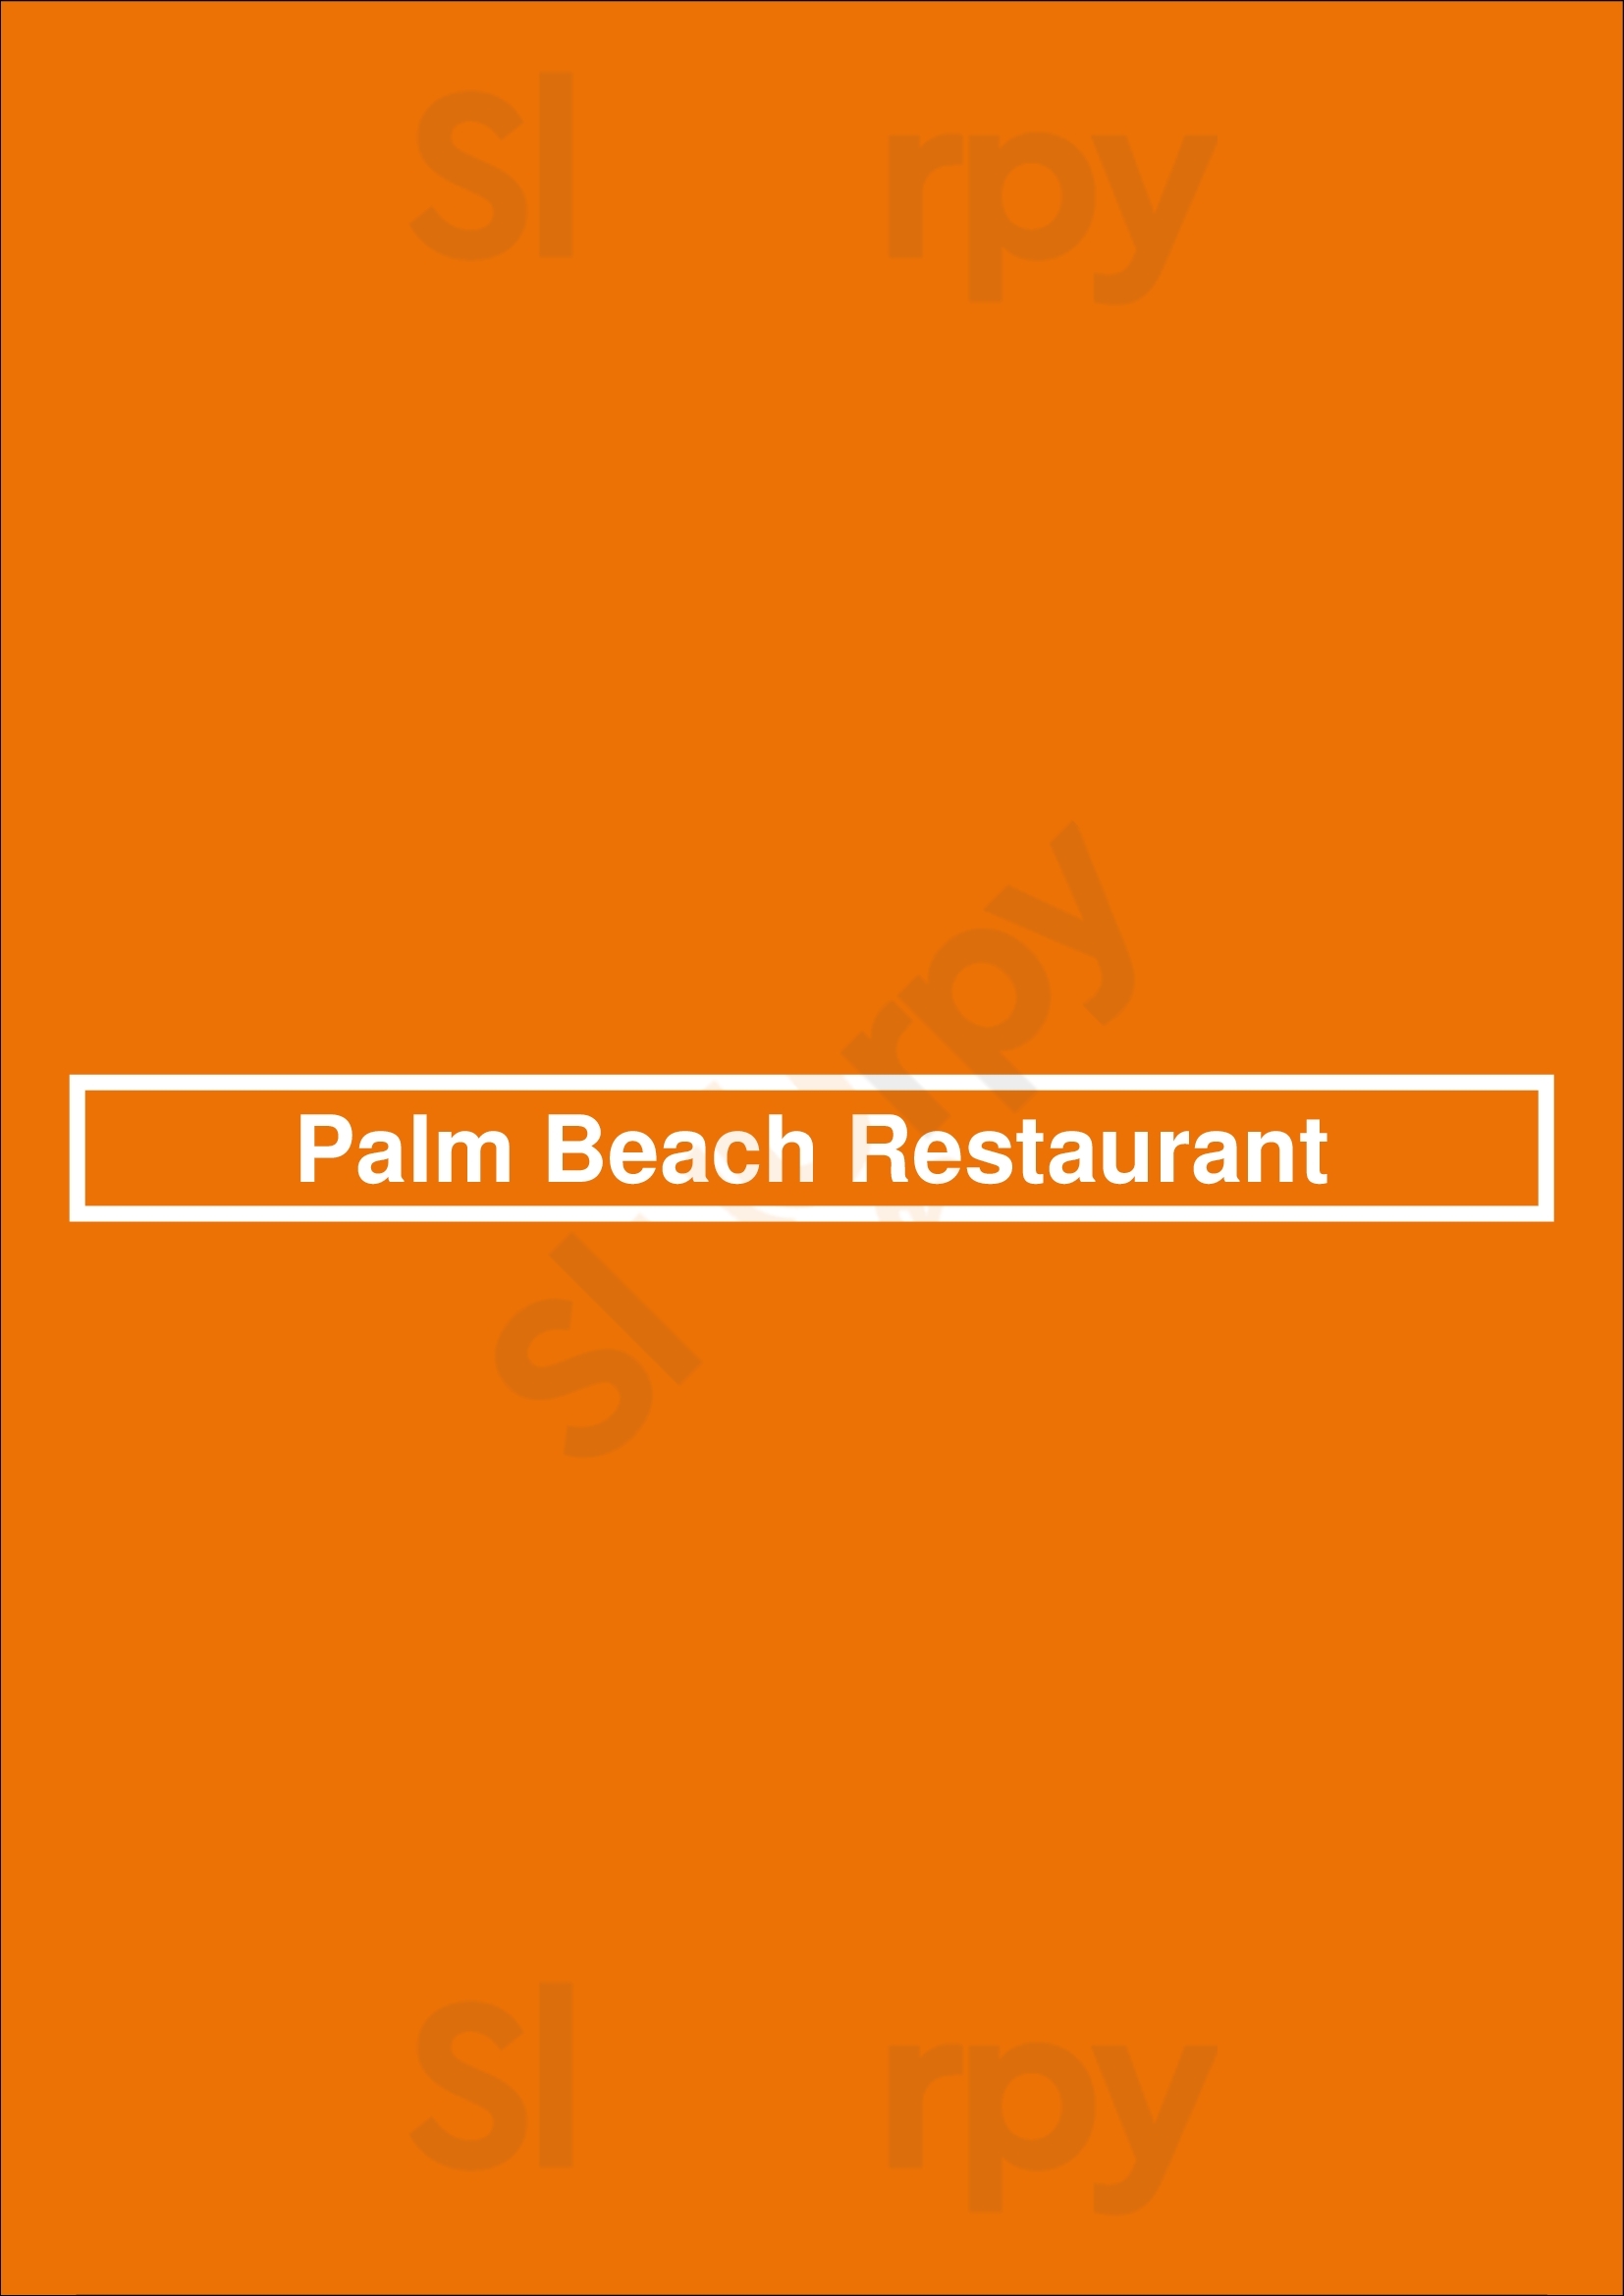 Palm Beach Restaurant Wembley Menu - 1